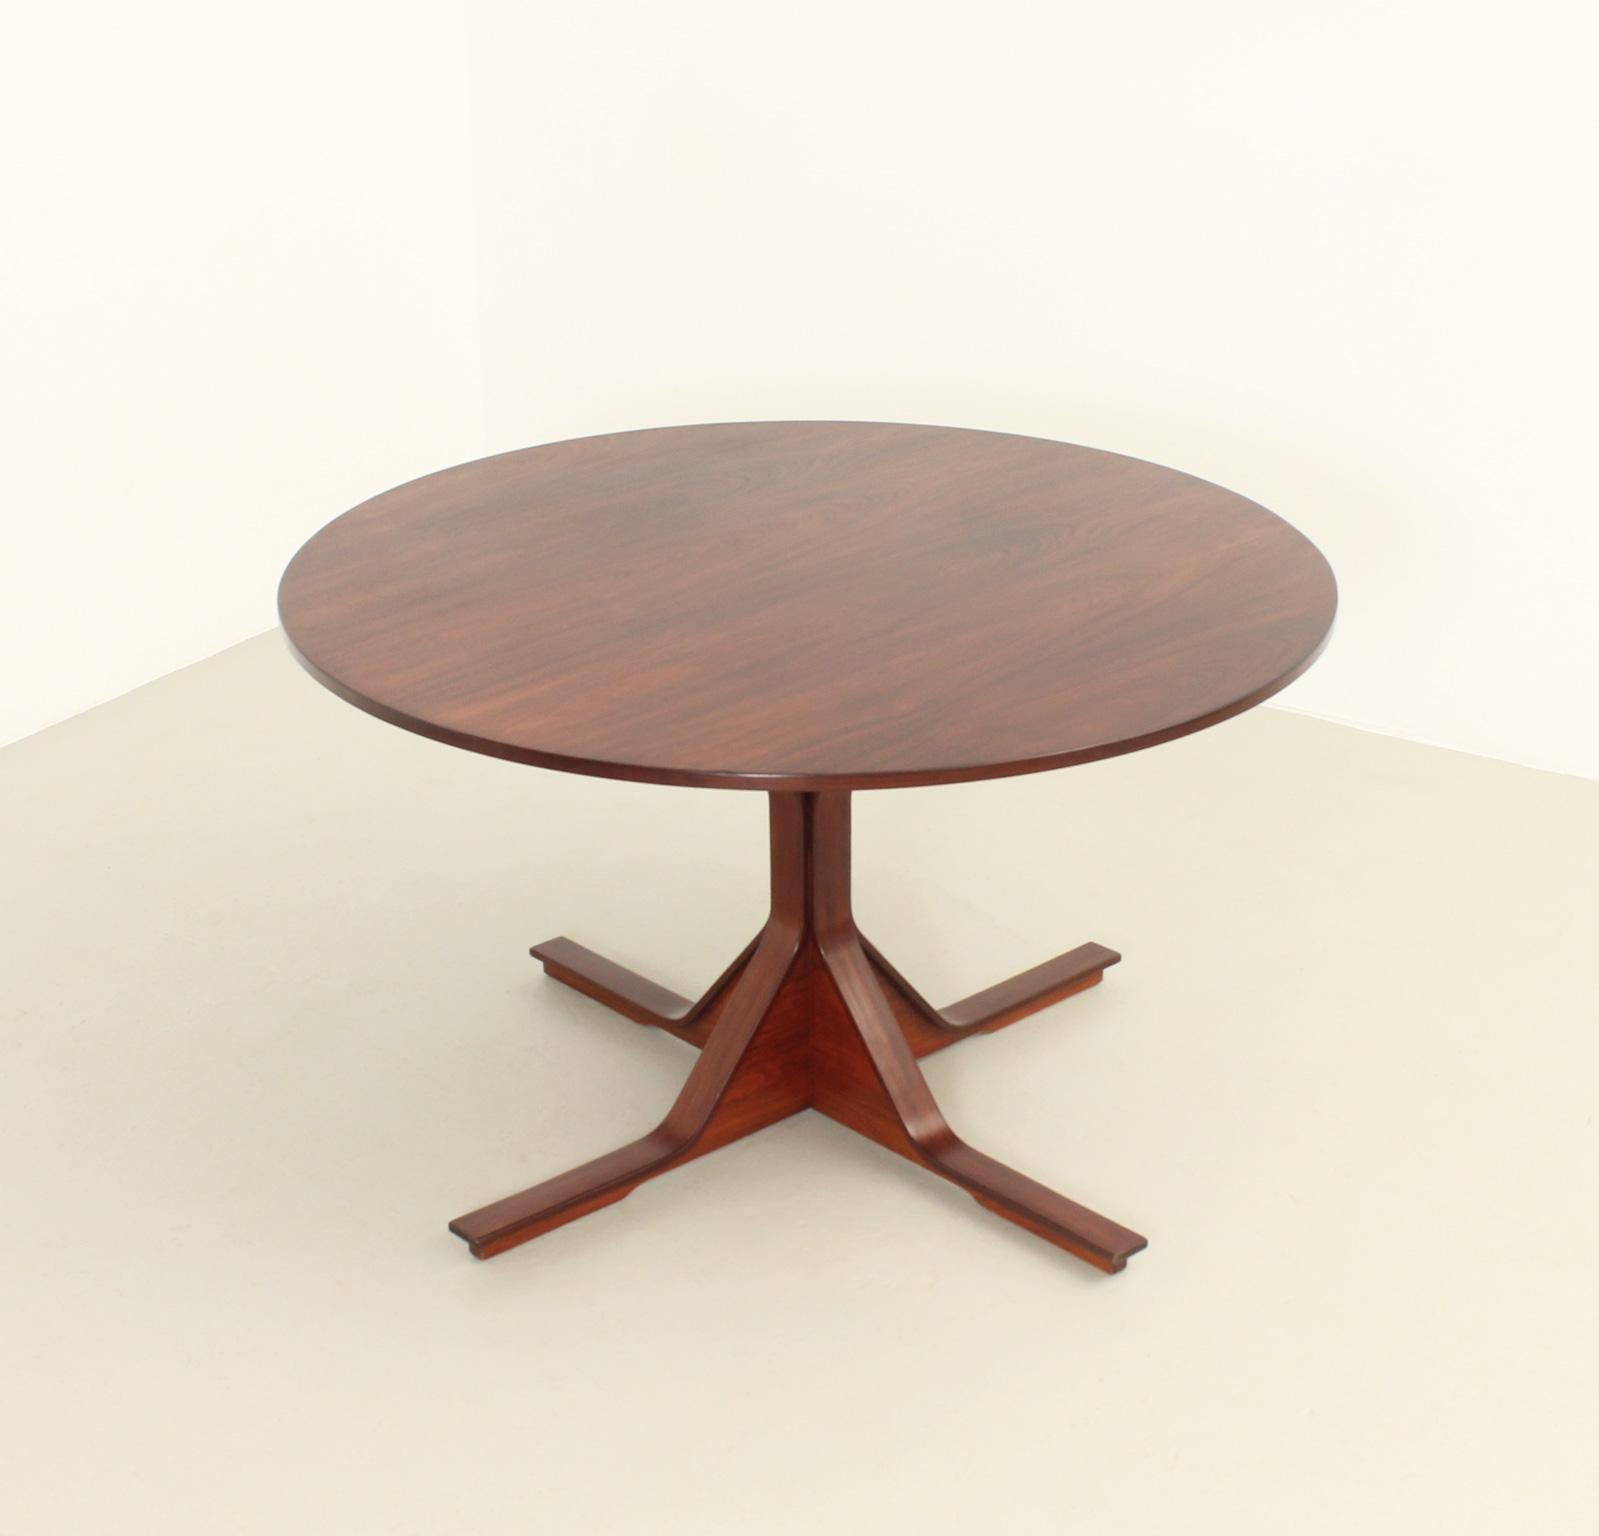 Round dining table model 522 designed in 1960 by Gianfranco Frattini for Bernini, Italy. Hardwood plywood.